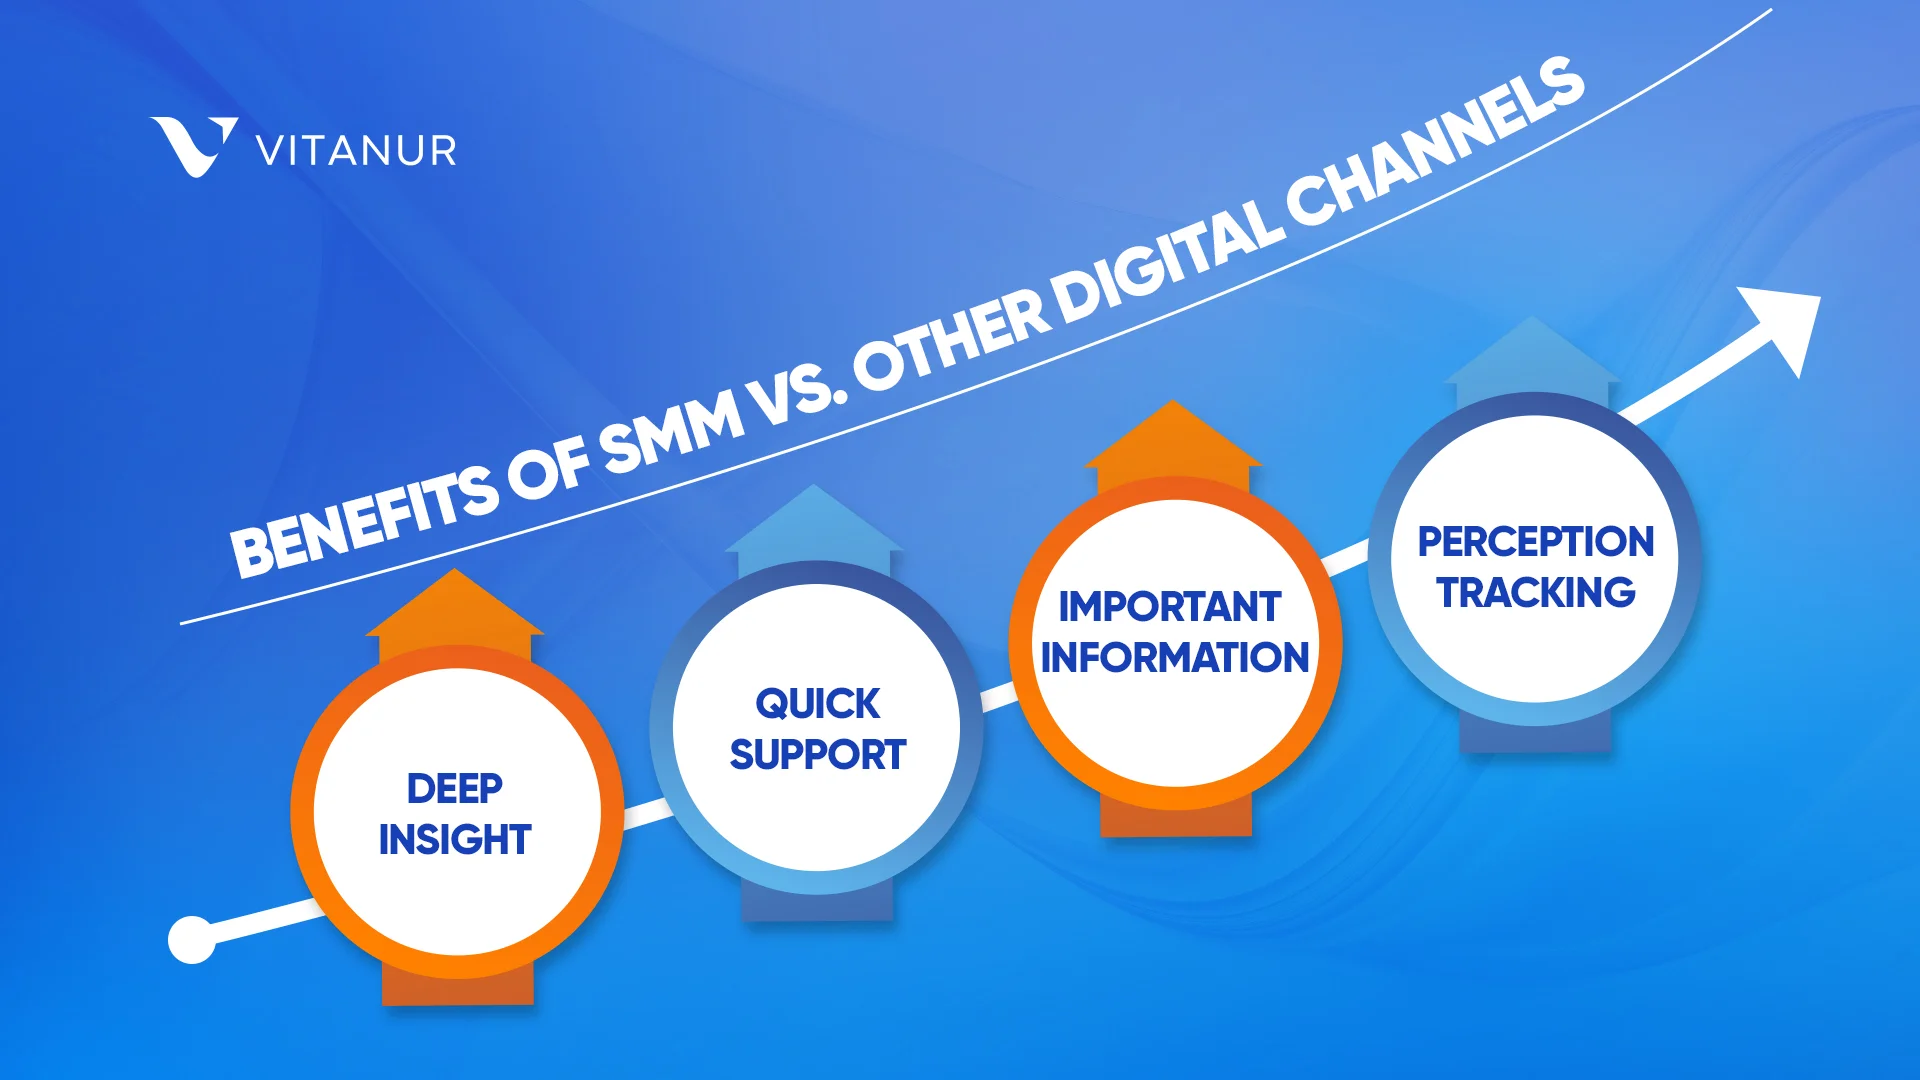 benefits of smm vs other digital channels